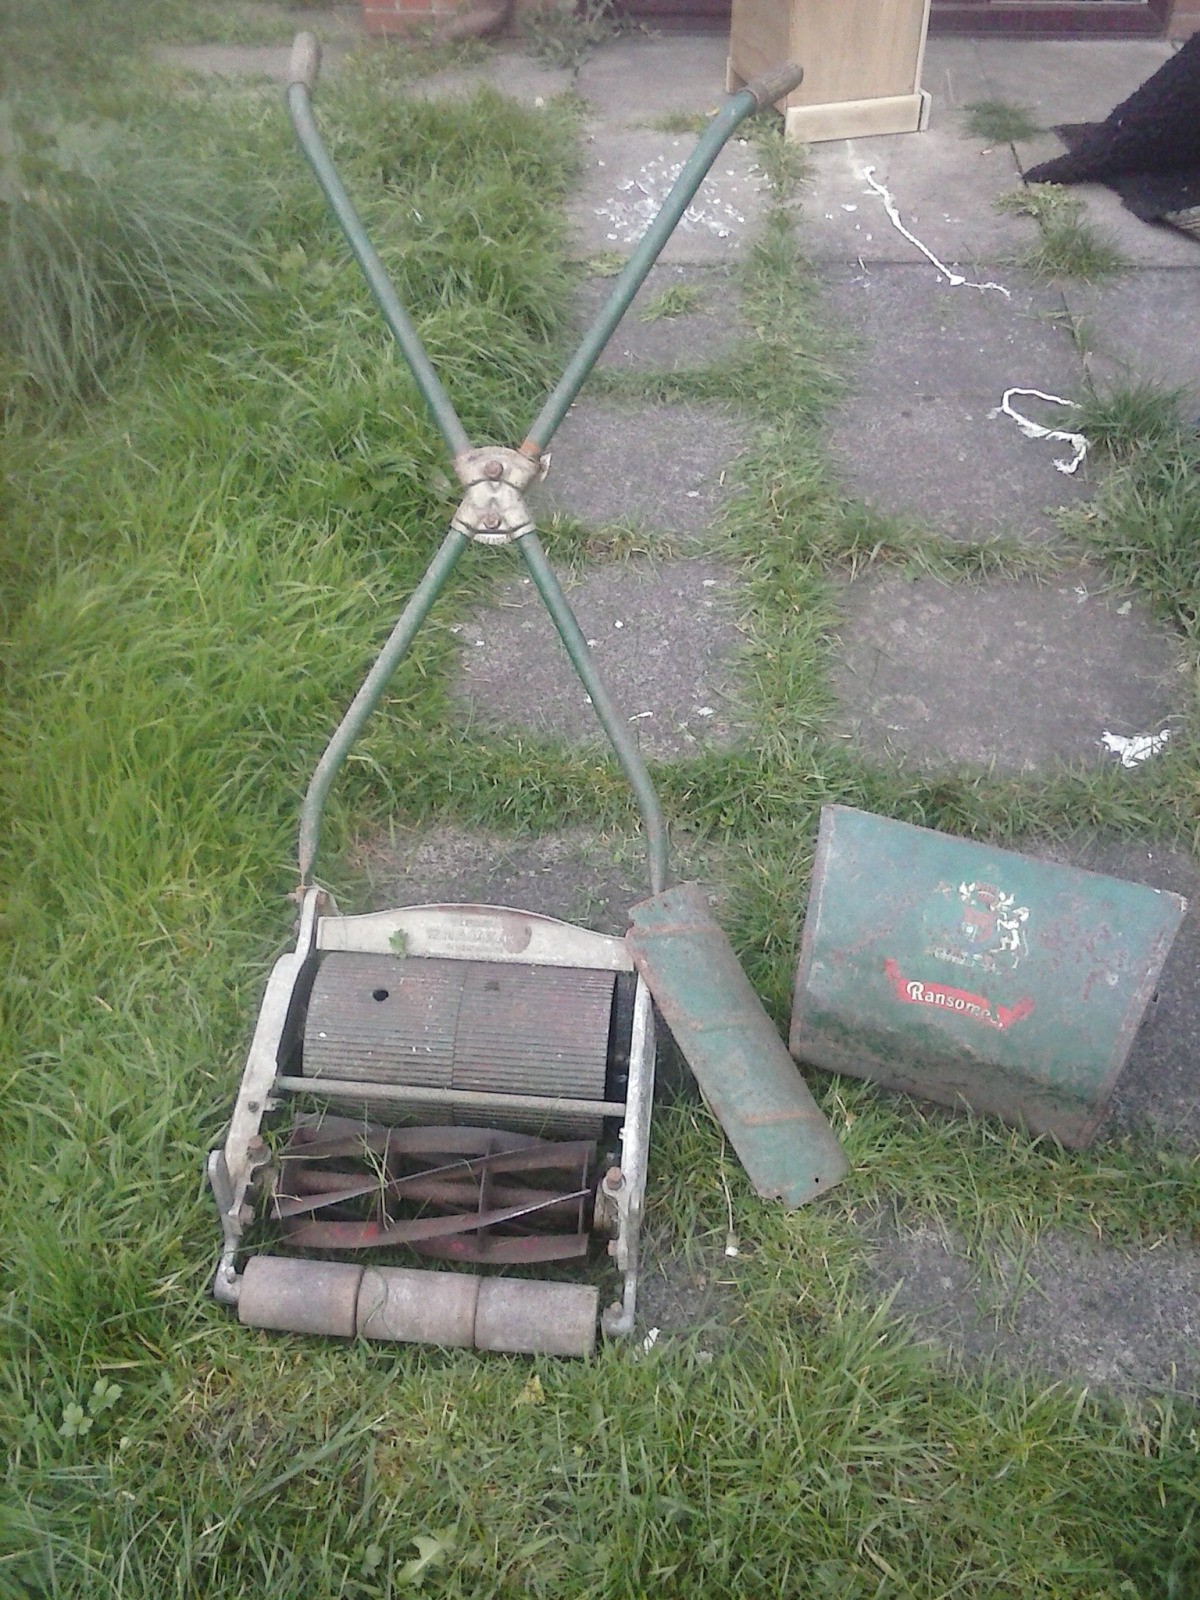 Value of a Ransones Antique Reel Lawn Mower?